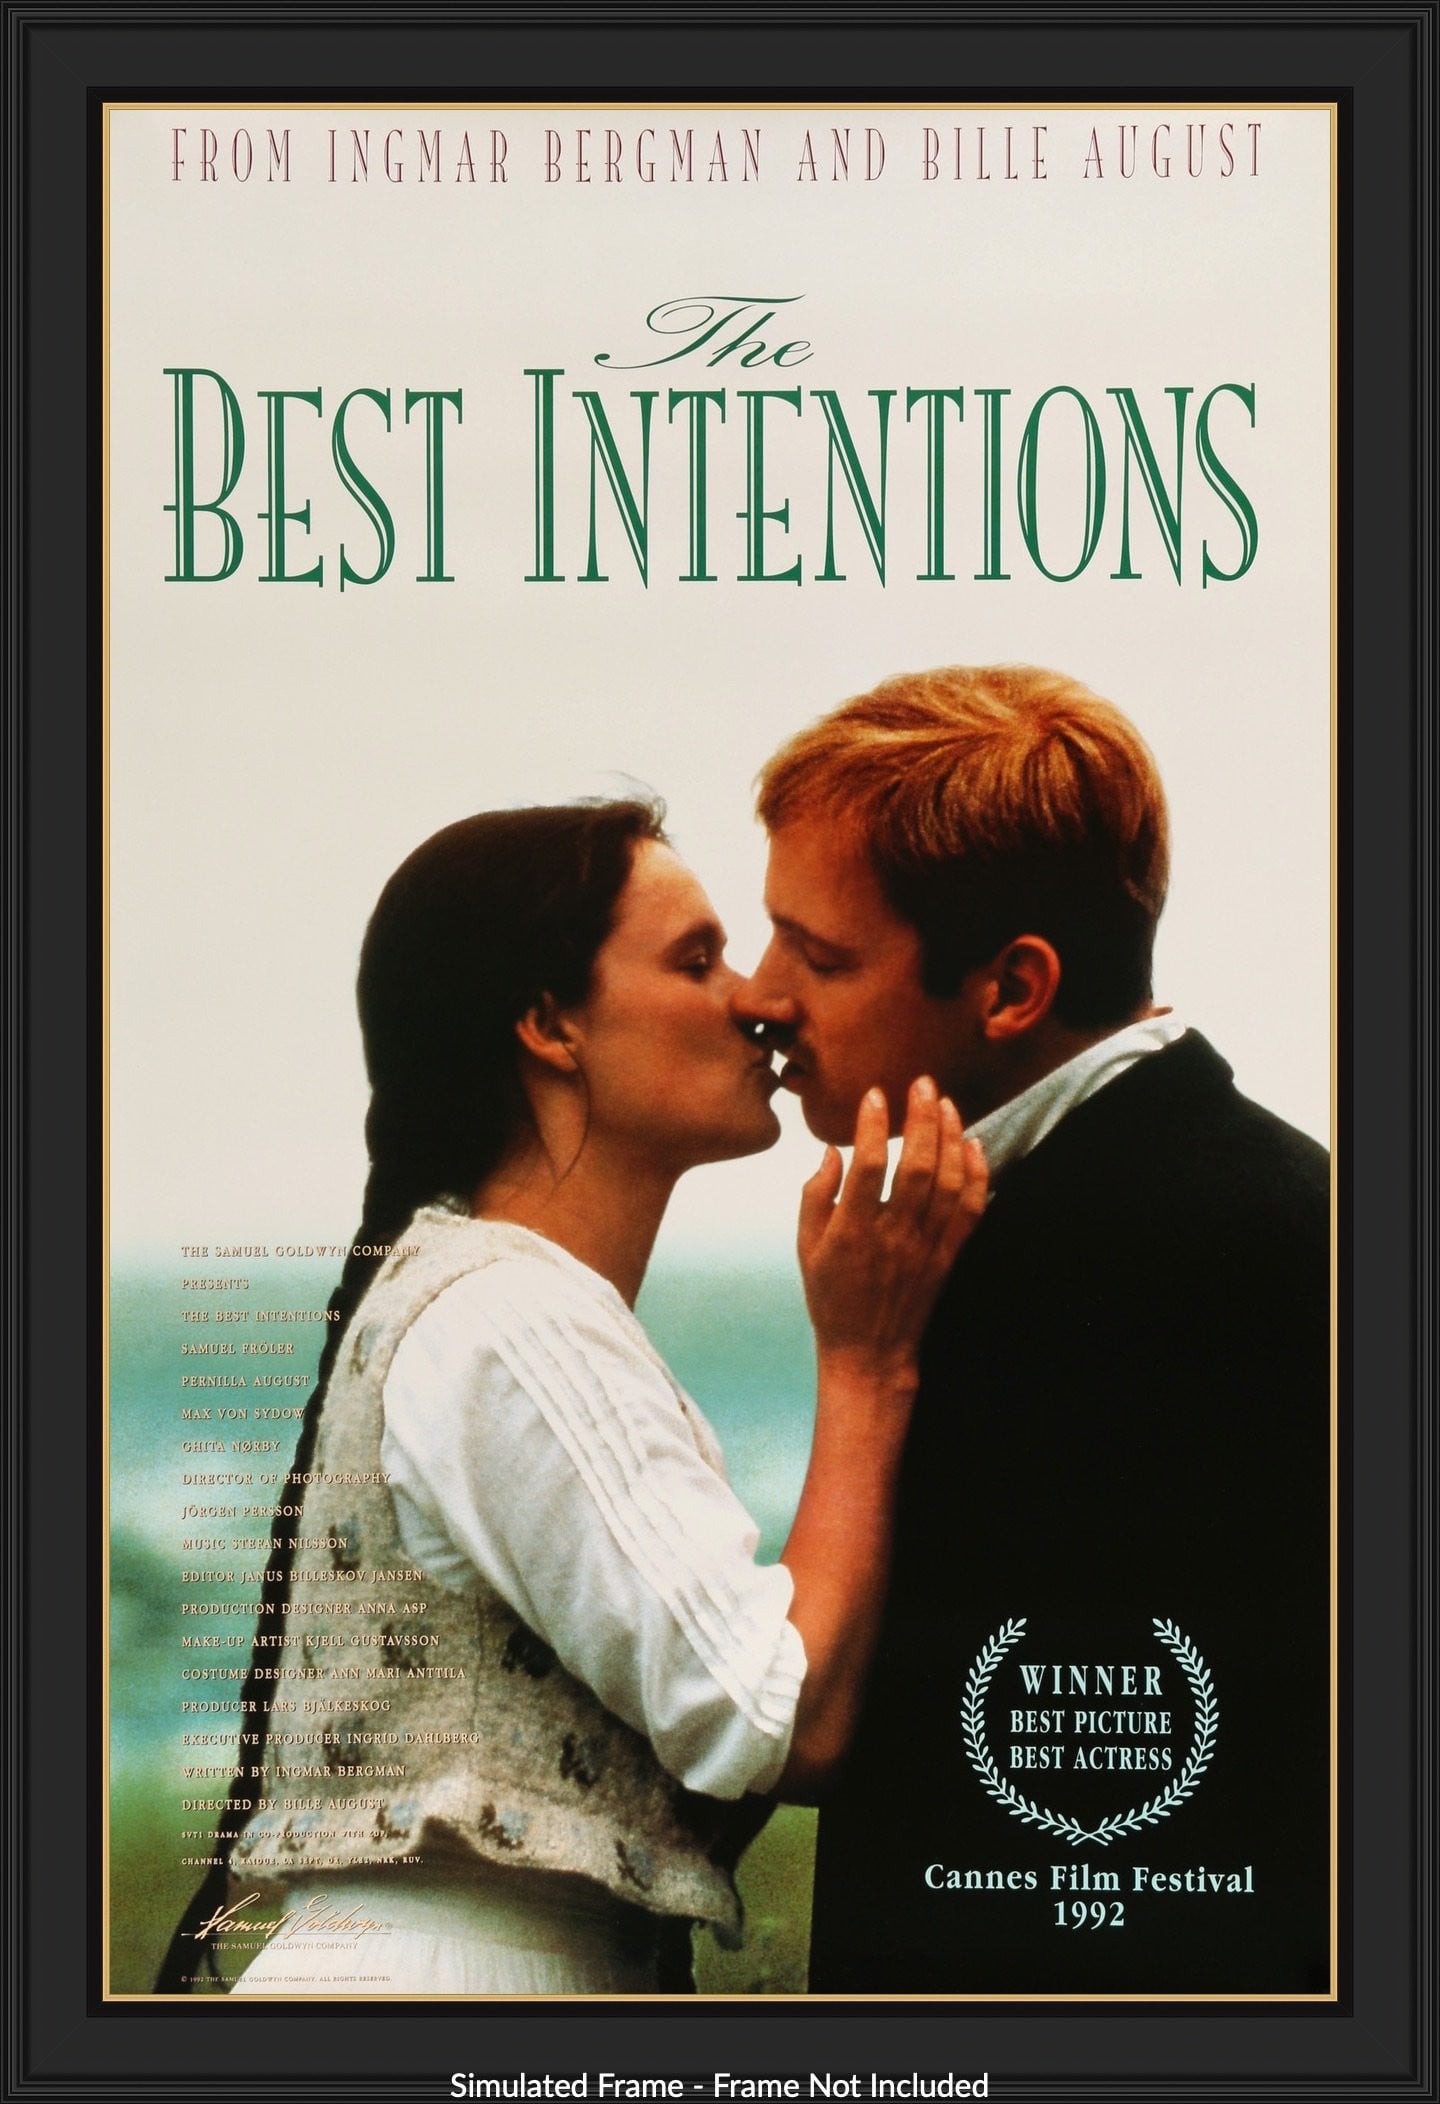 Best Intentions (1992) original movie poster for sale at Original Film Art